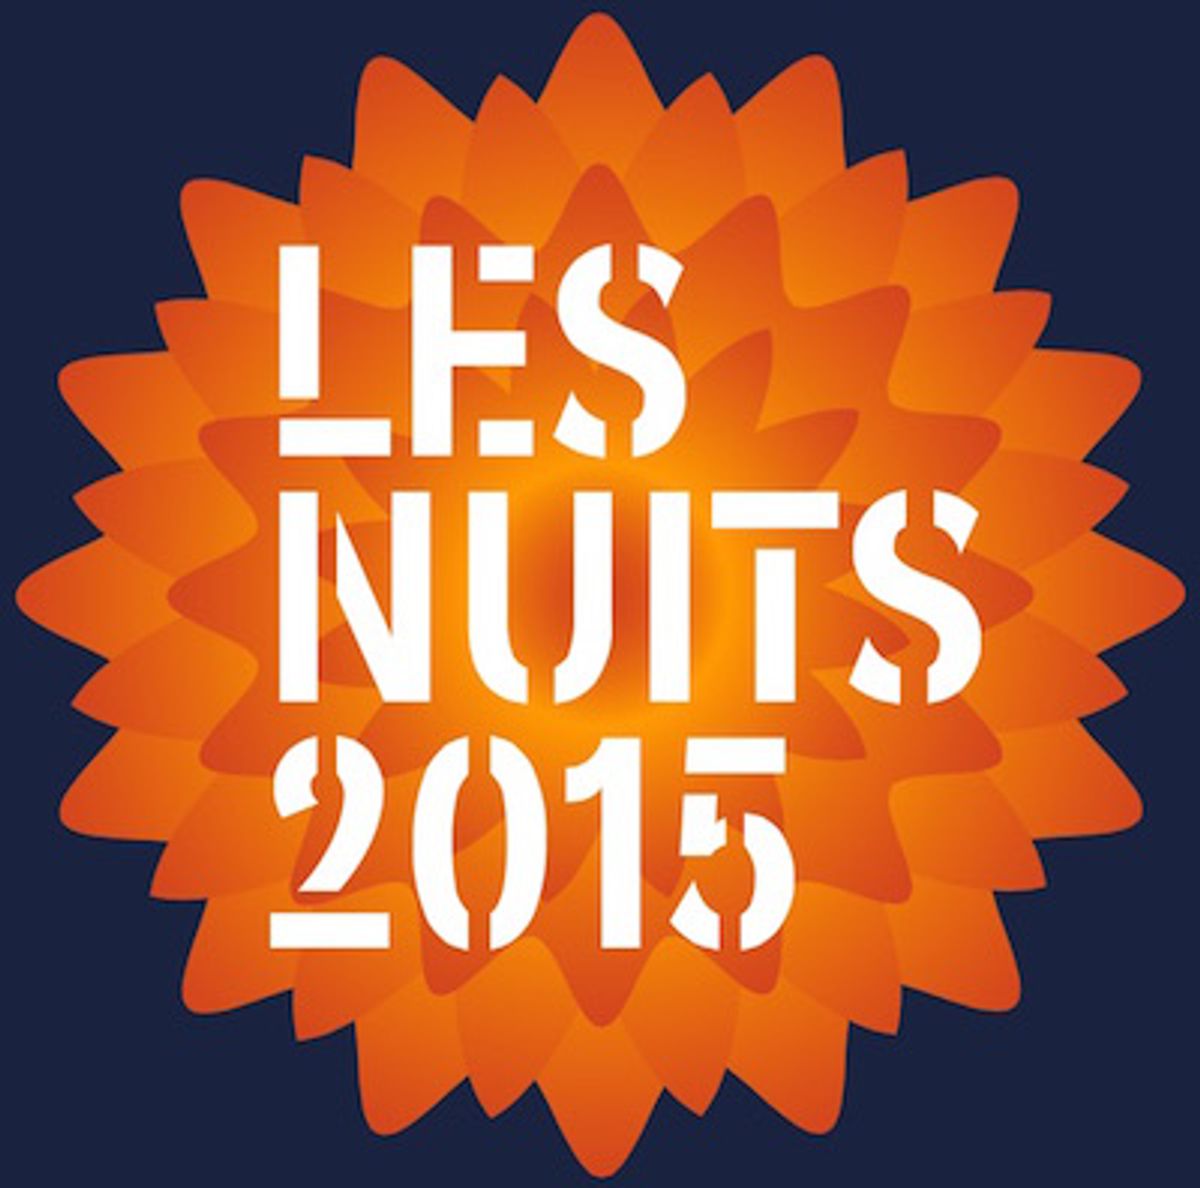 Les Nuits 2015 - Concertgids special (2)